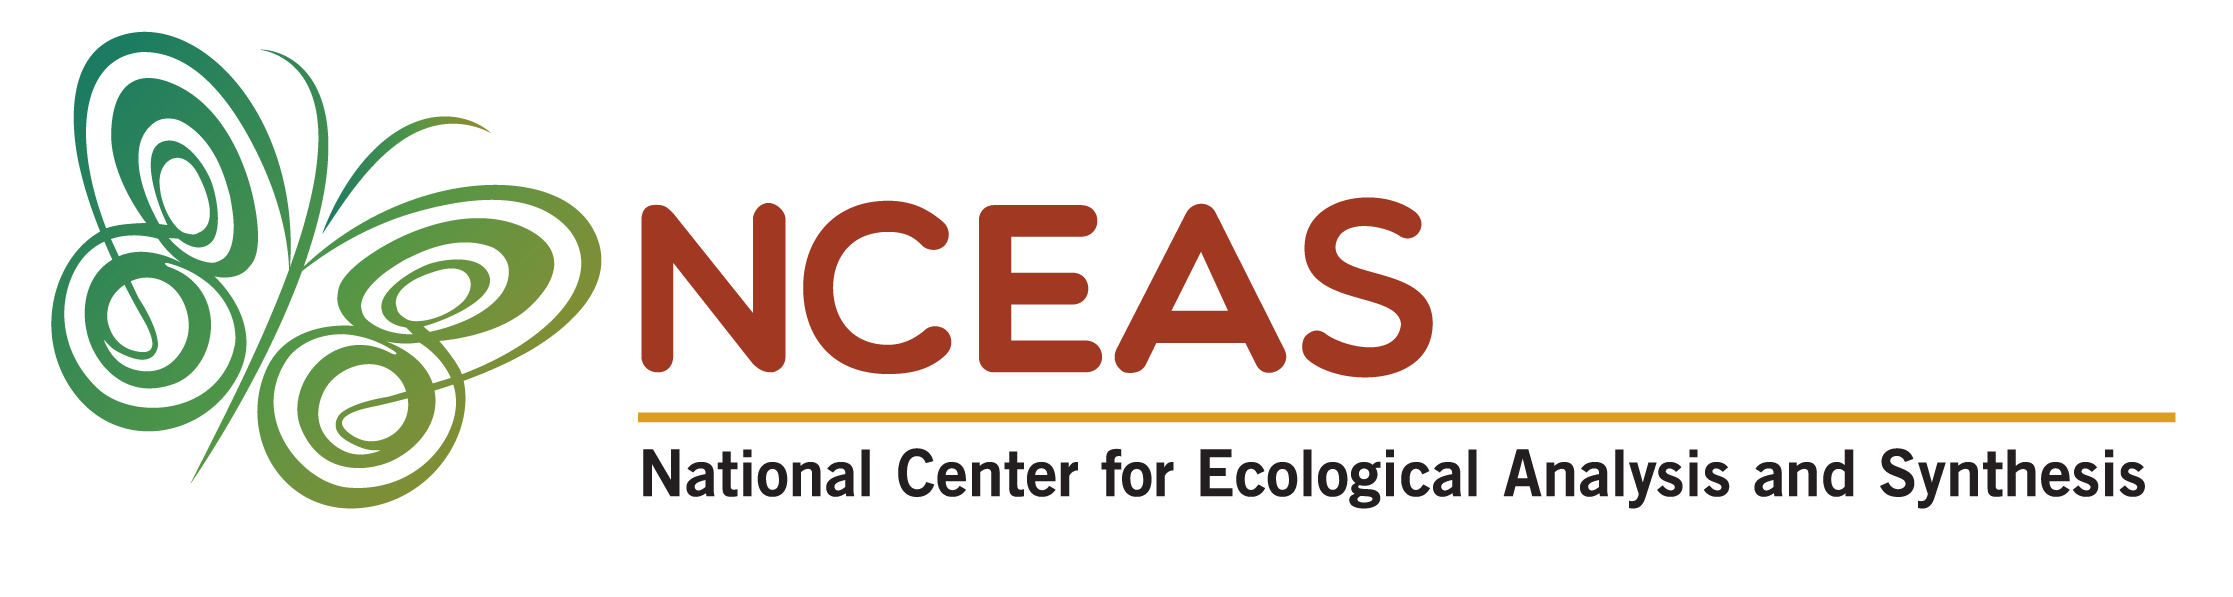 NCEAS-full logo-4C